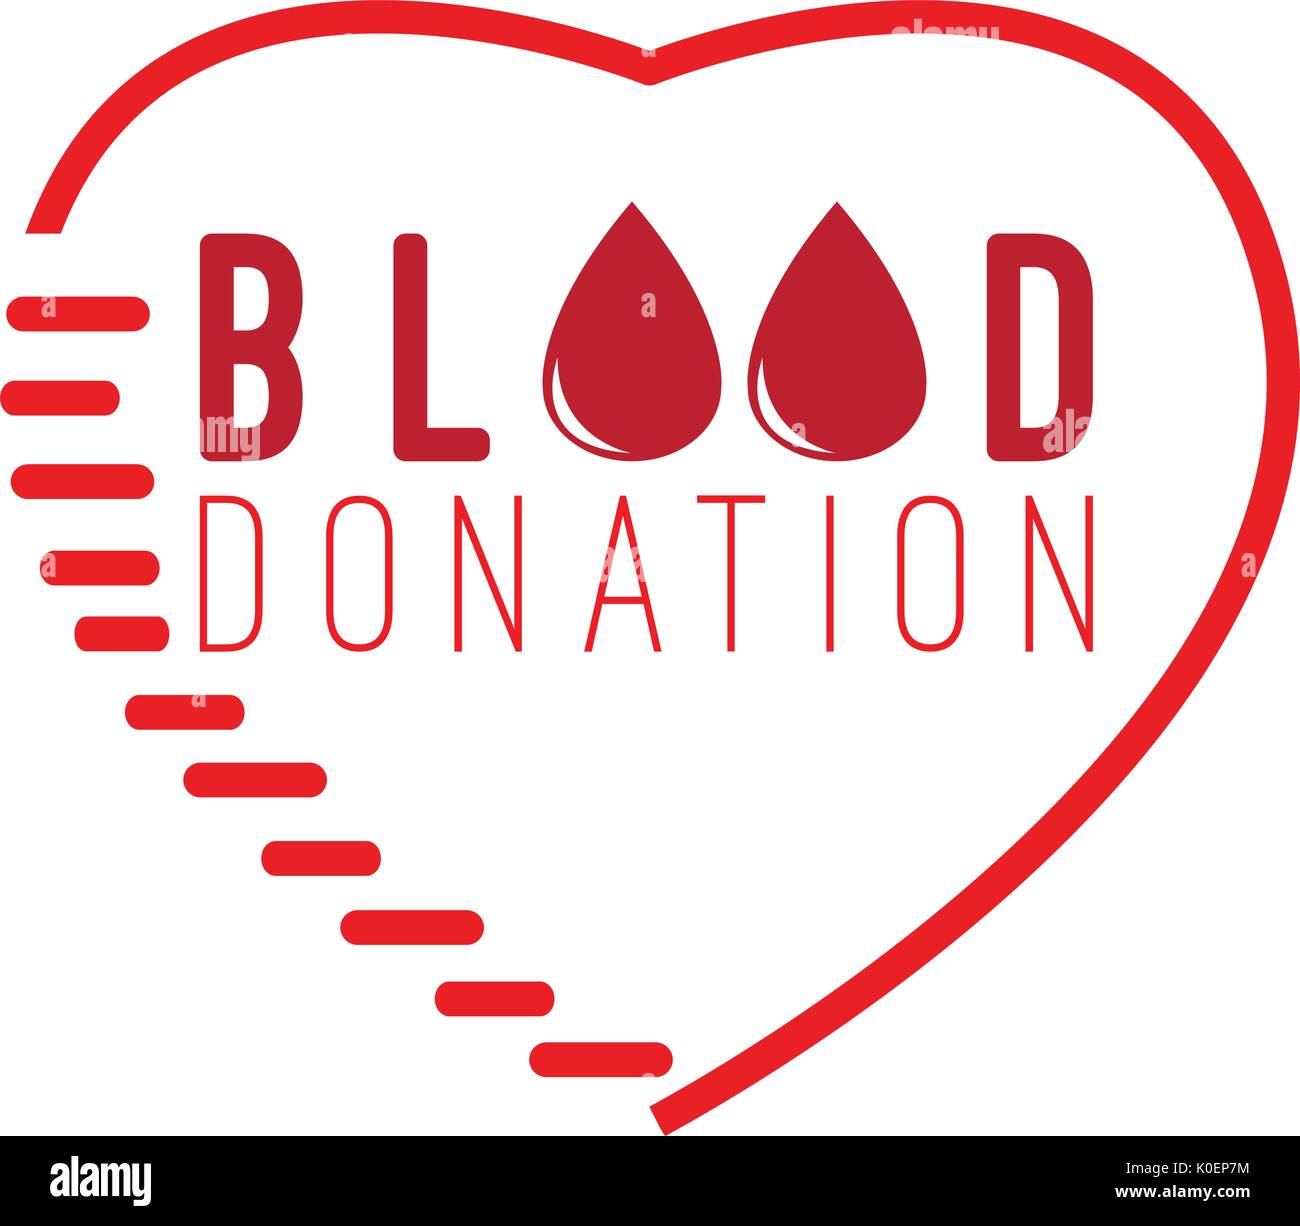 Blood donation illustration Stock Vector